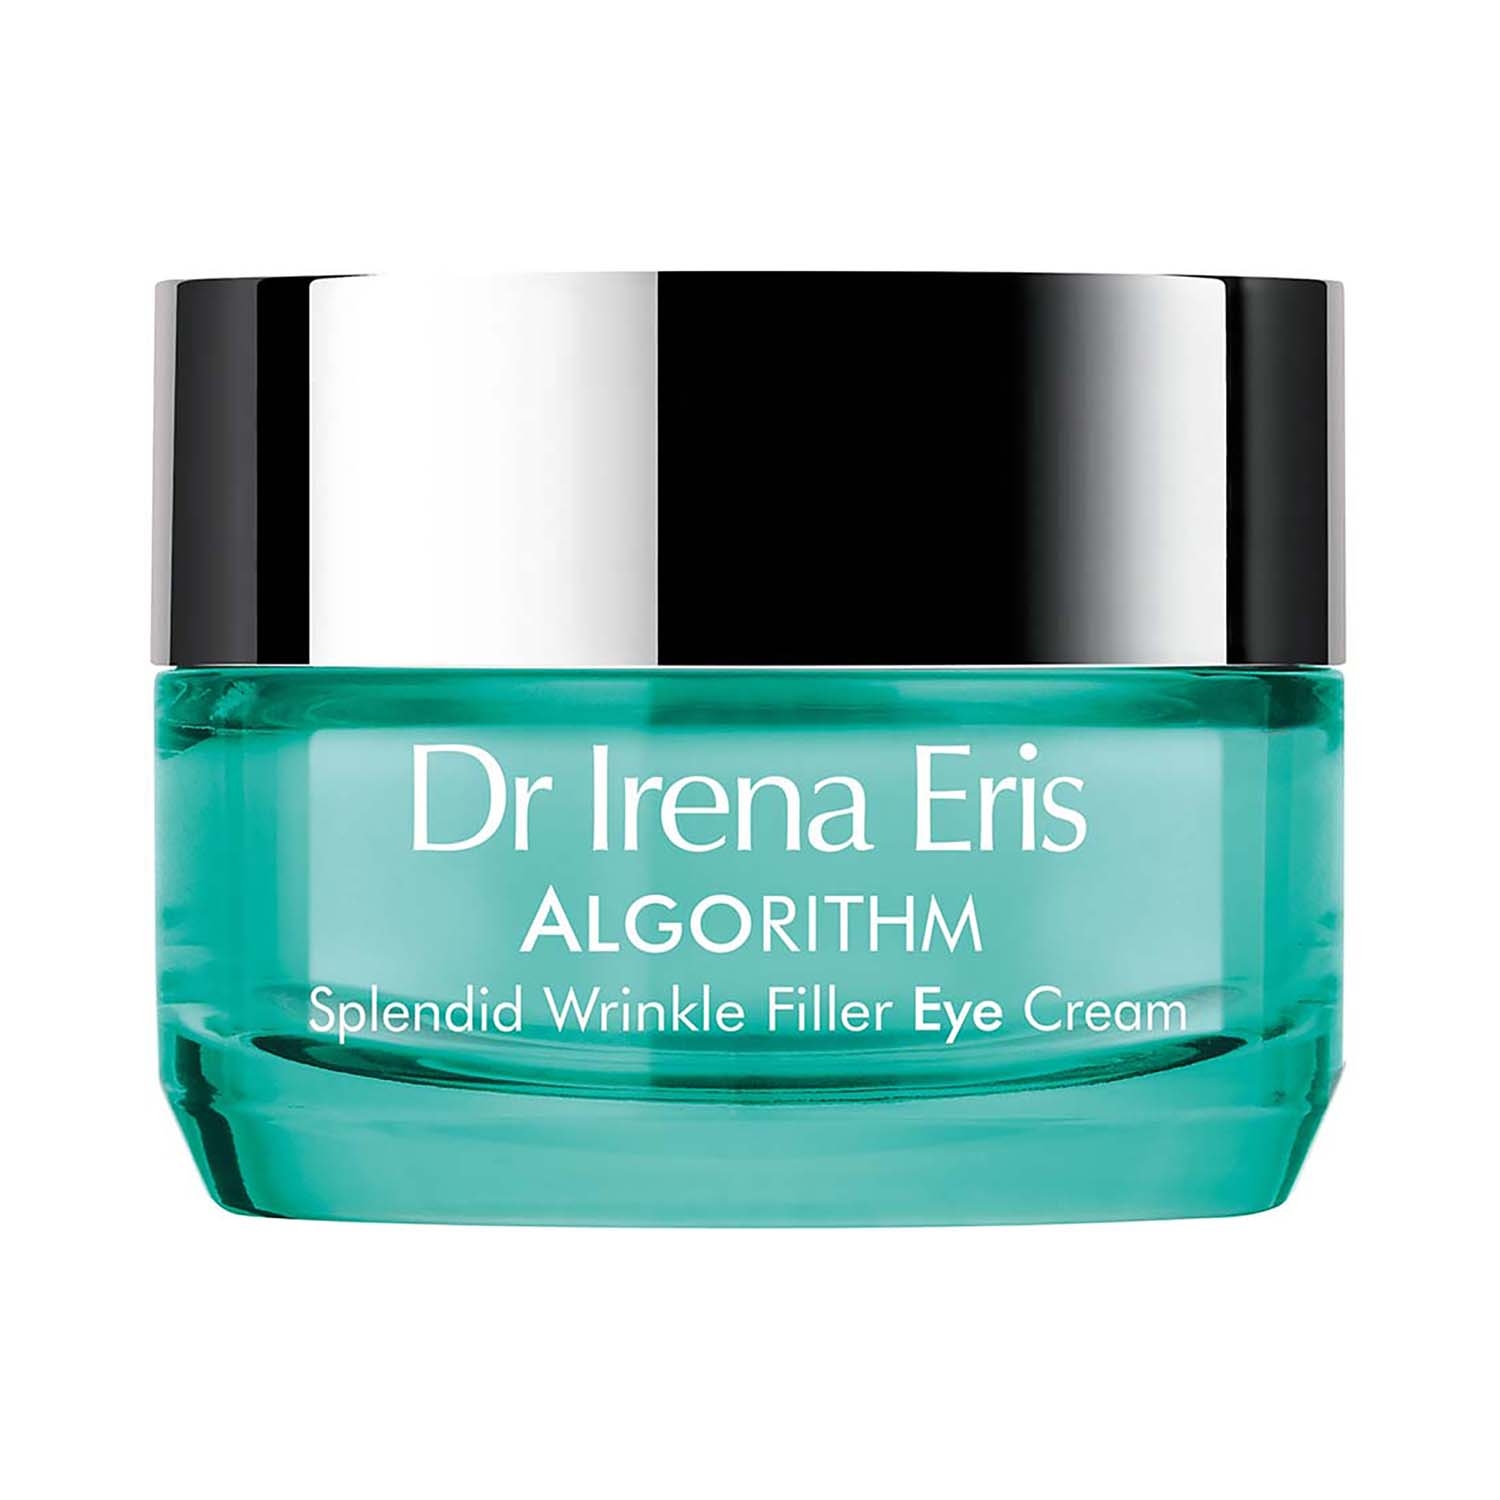 Dr Irena Eris | Dr Irena Eris Algorithm Splendid Wrinkle Filler Eye Cream (15ml)